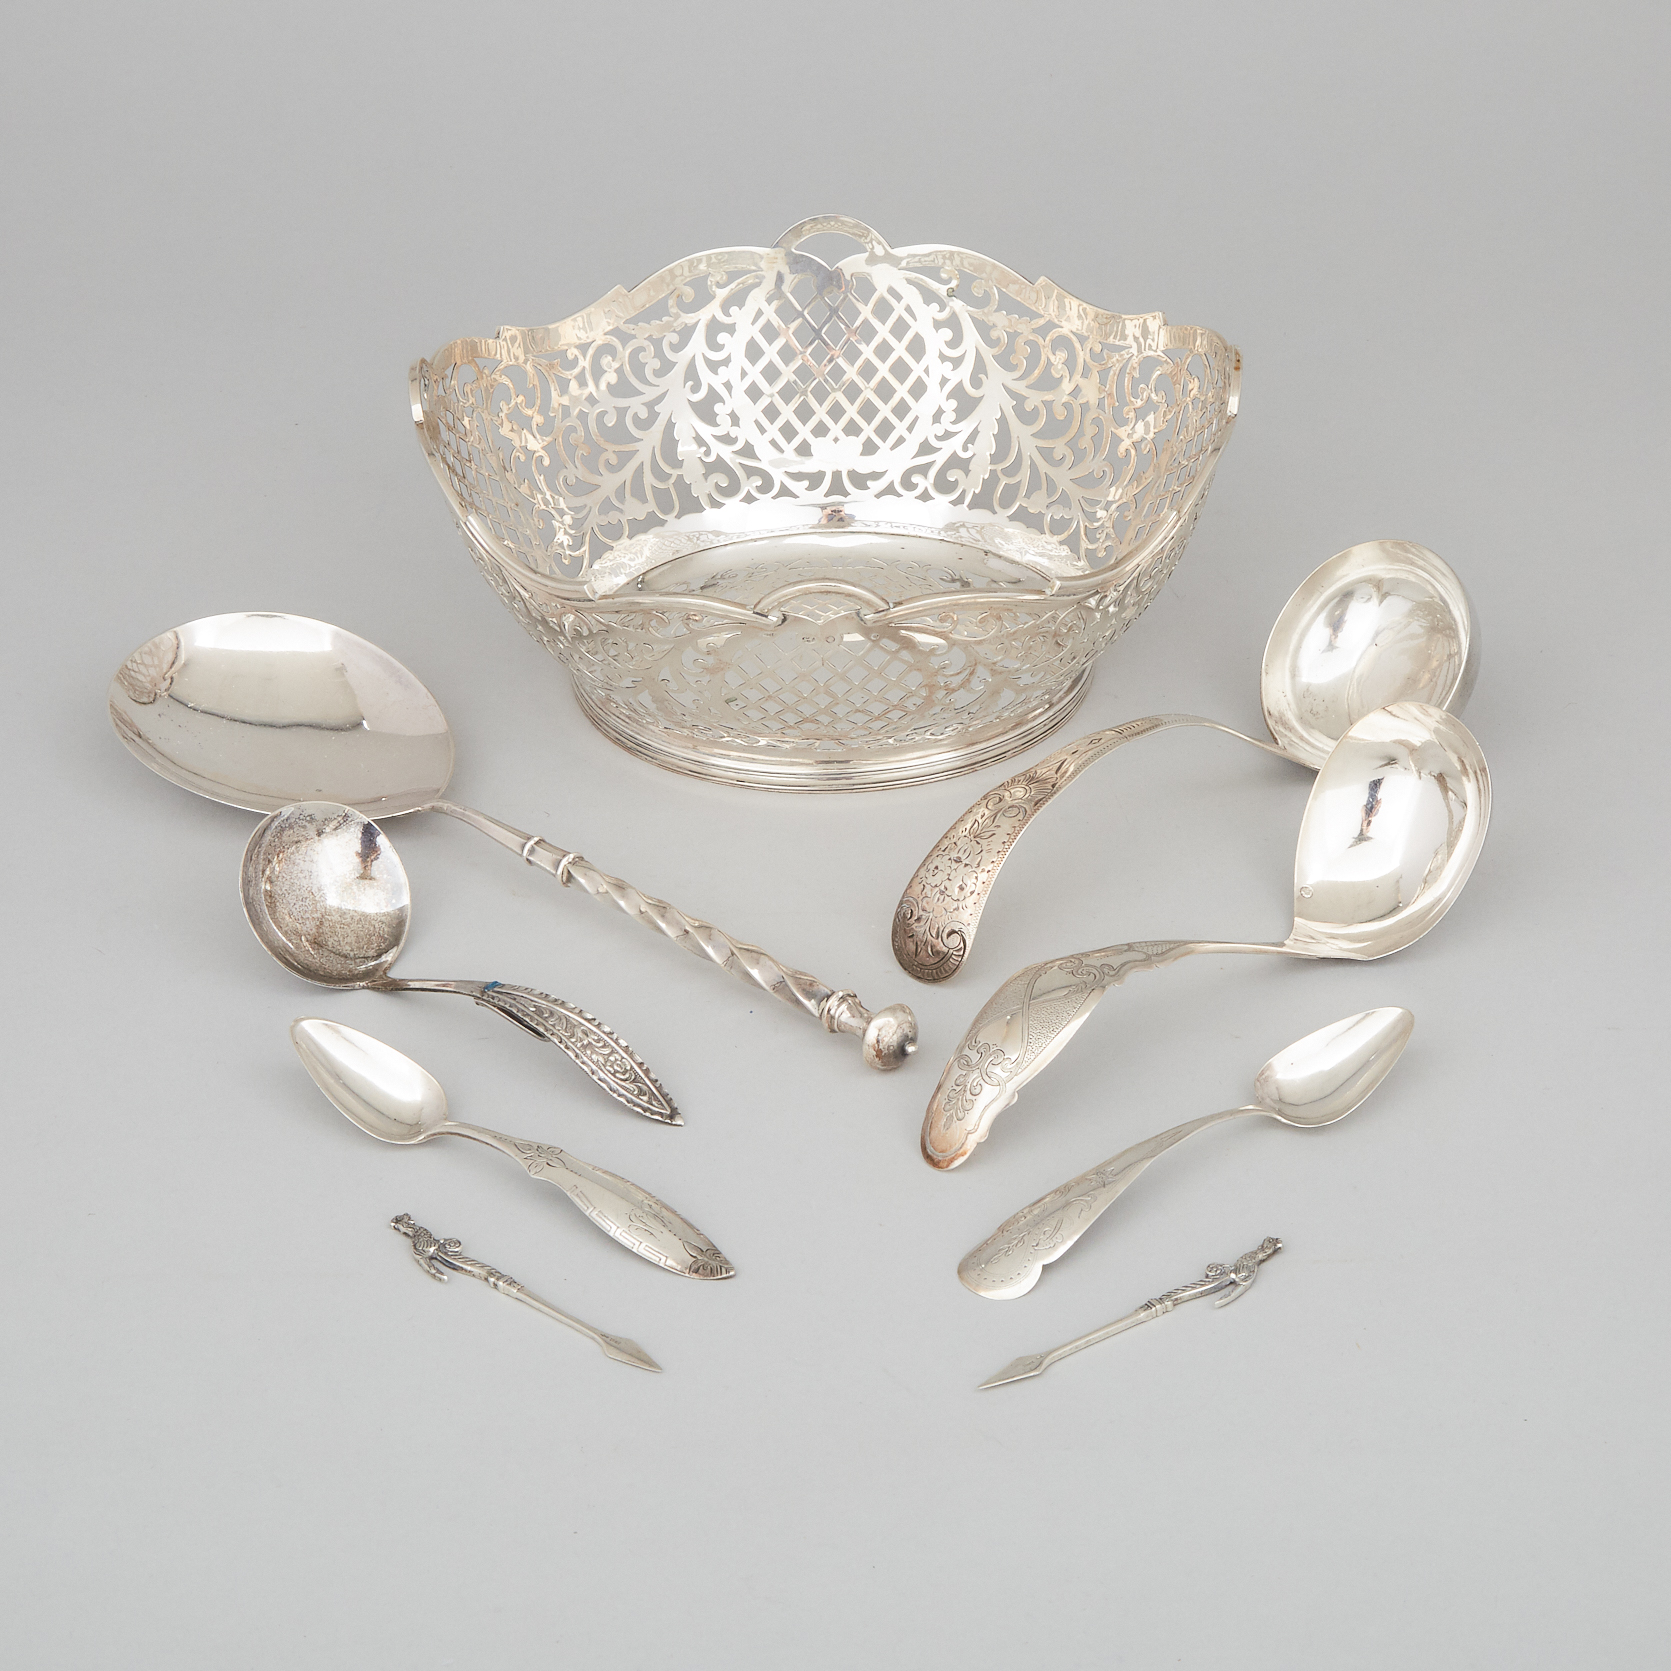 Dutch Silver Pierced Bowl, A. Presburg, Haarlem, and a Group of Flatware, 19th/20th century